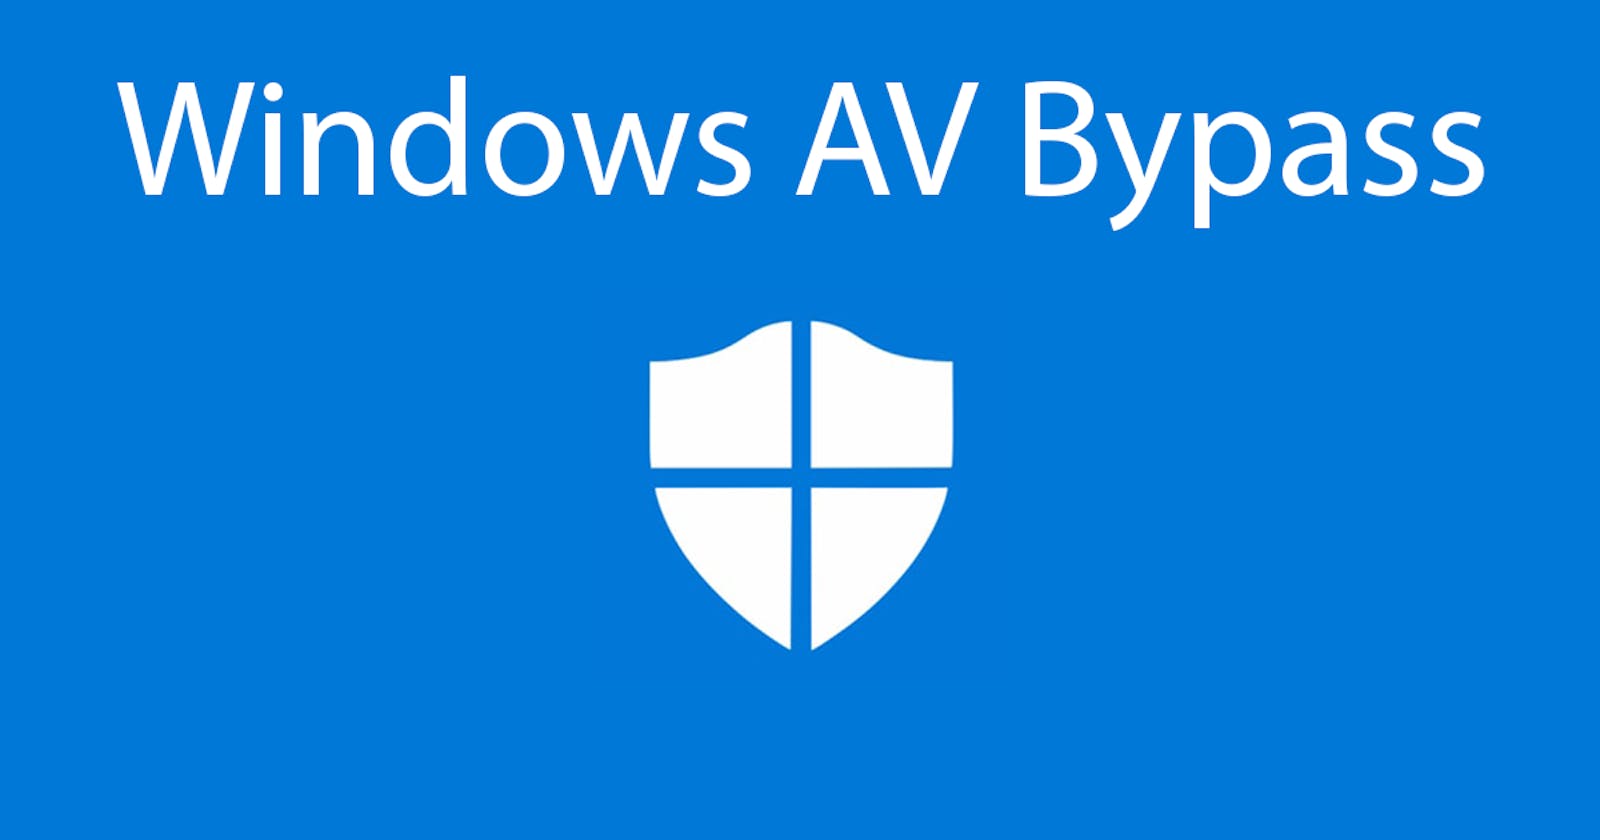 Basic Windows AV Bypass - Part 5 - Embed and Execute the Shellcode